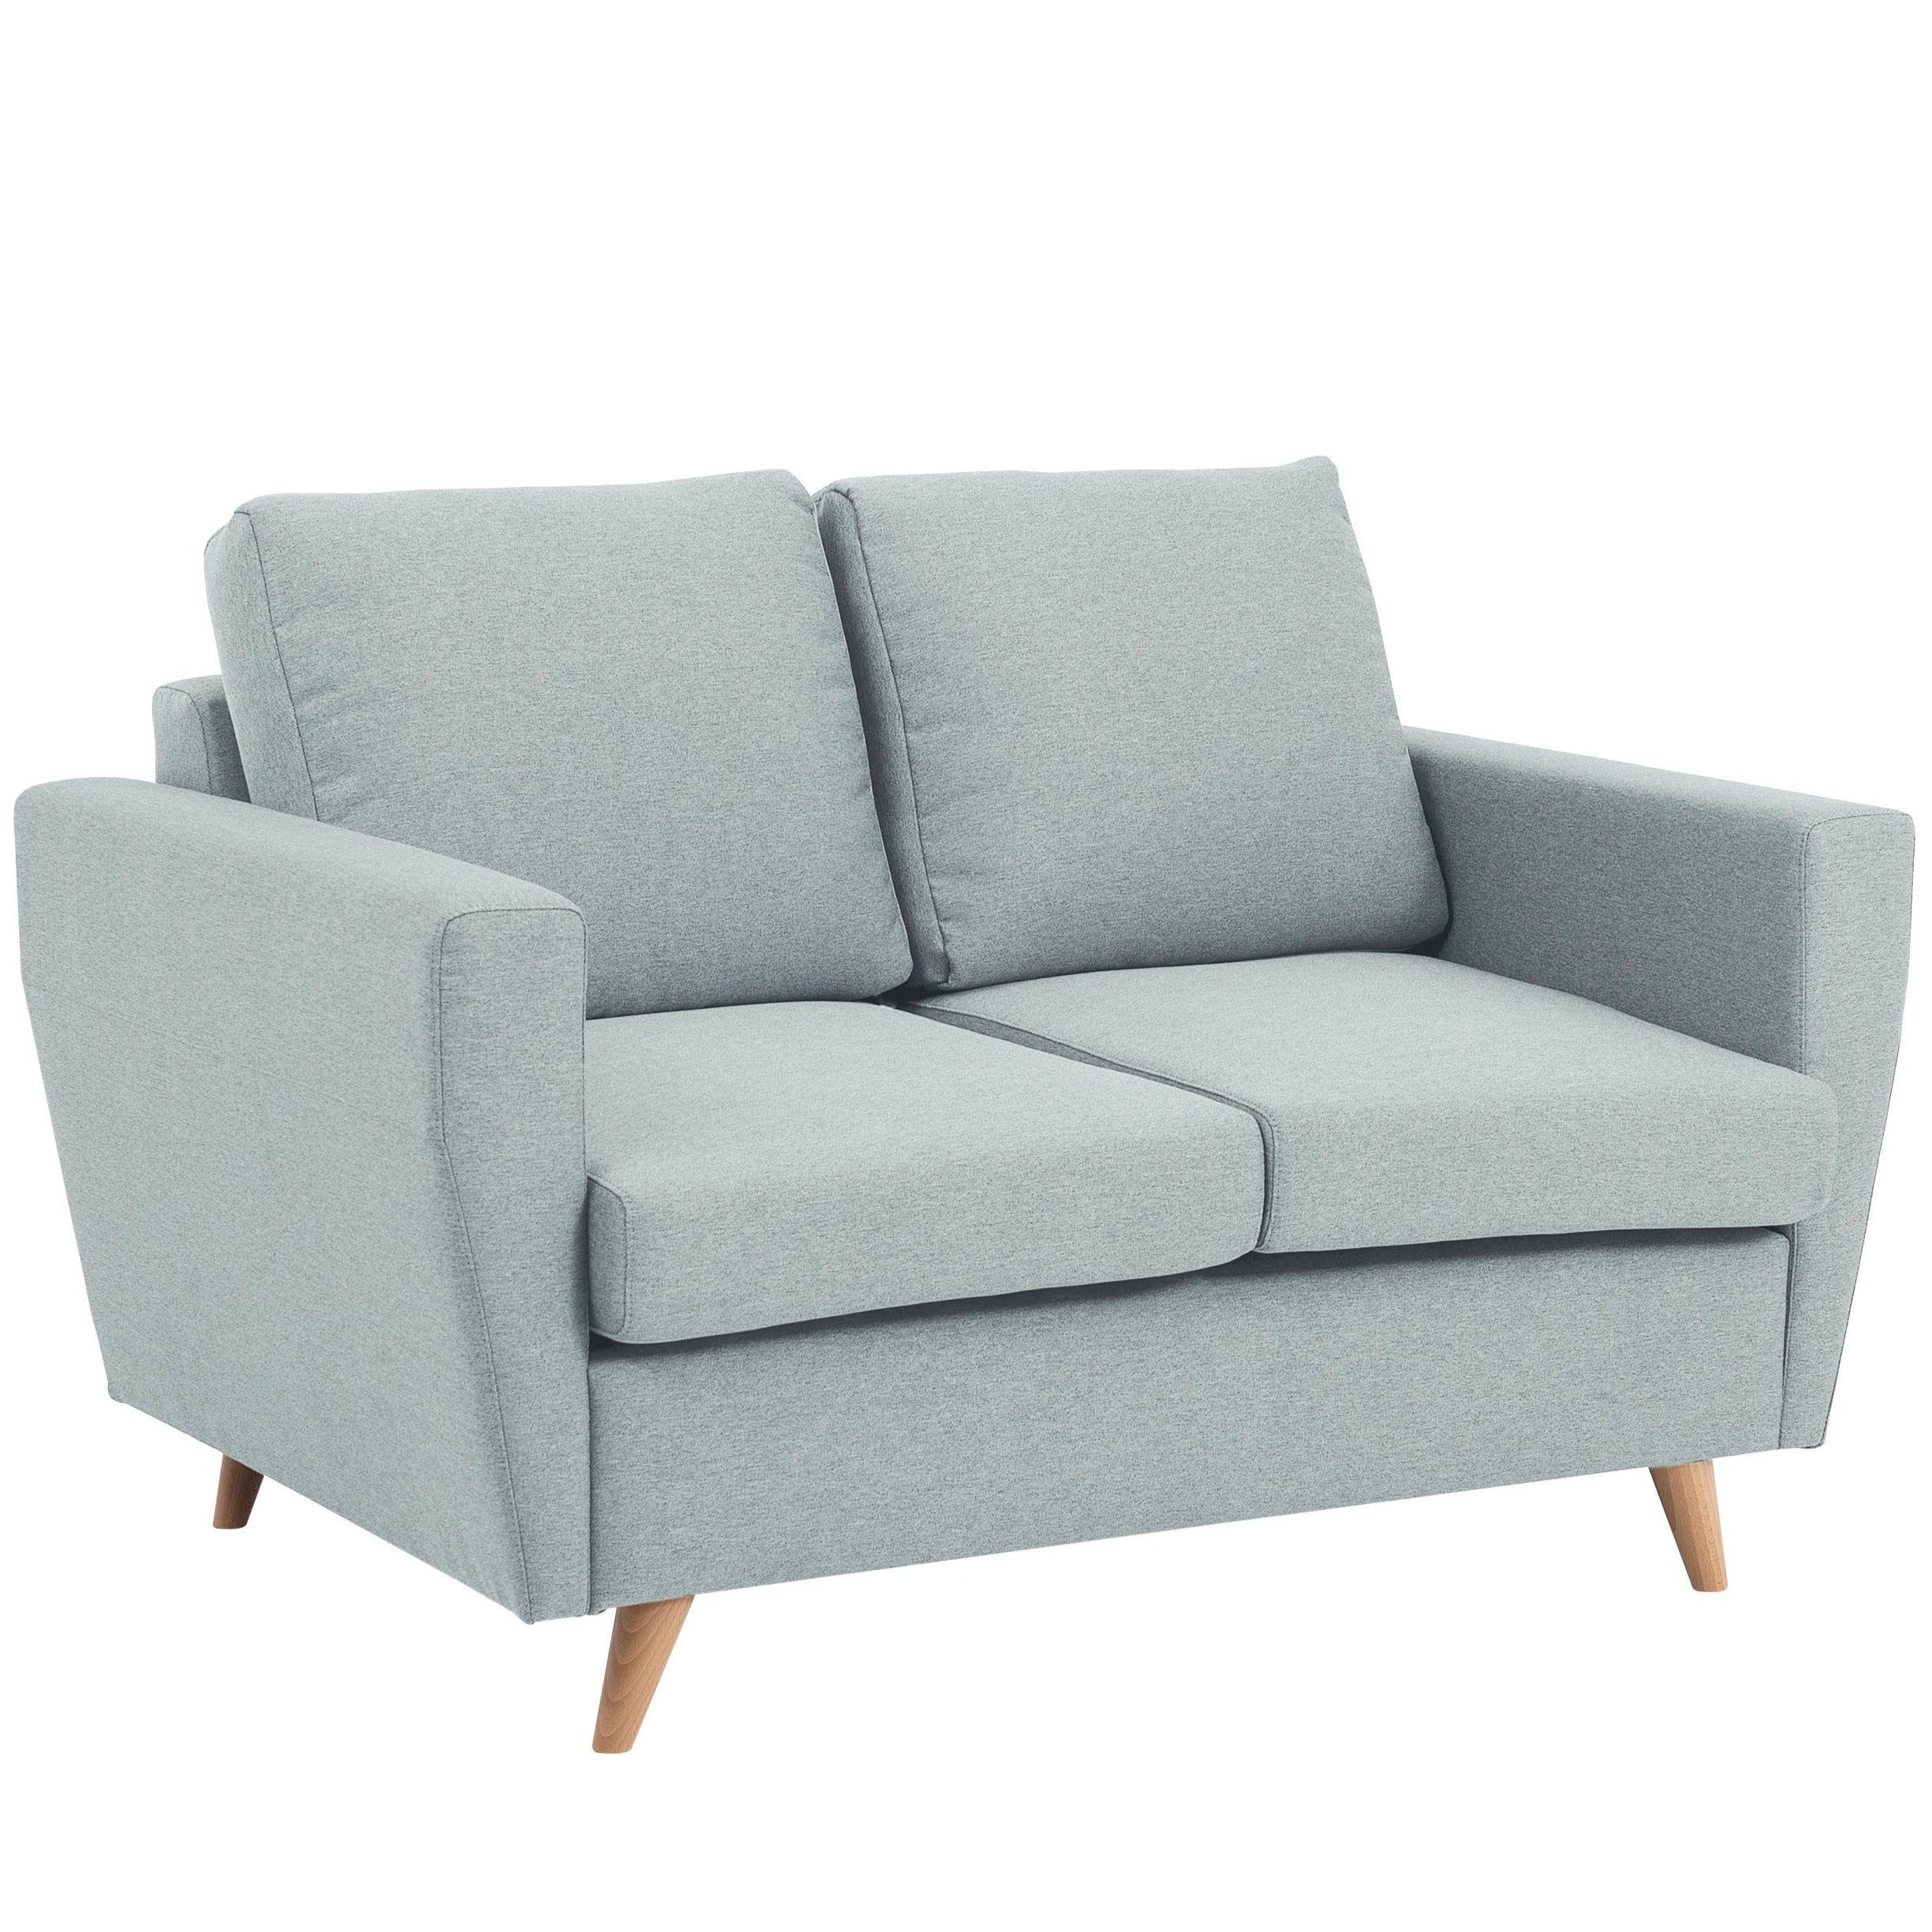 LOVER Sofa upholstery colour-platinum grey 2 seats